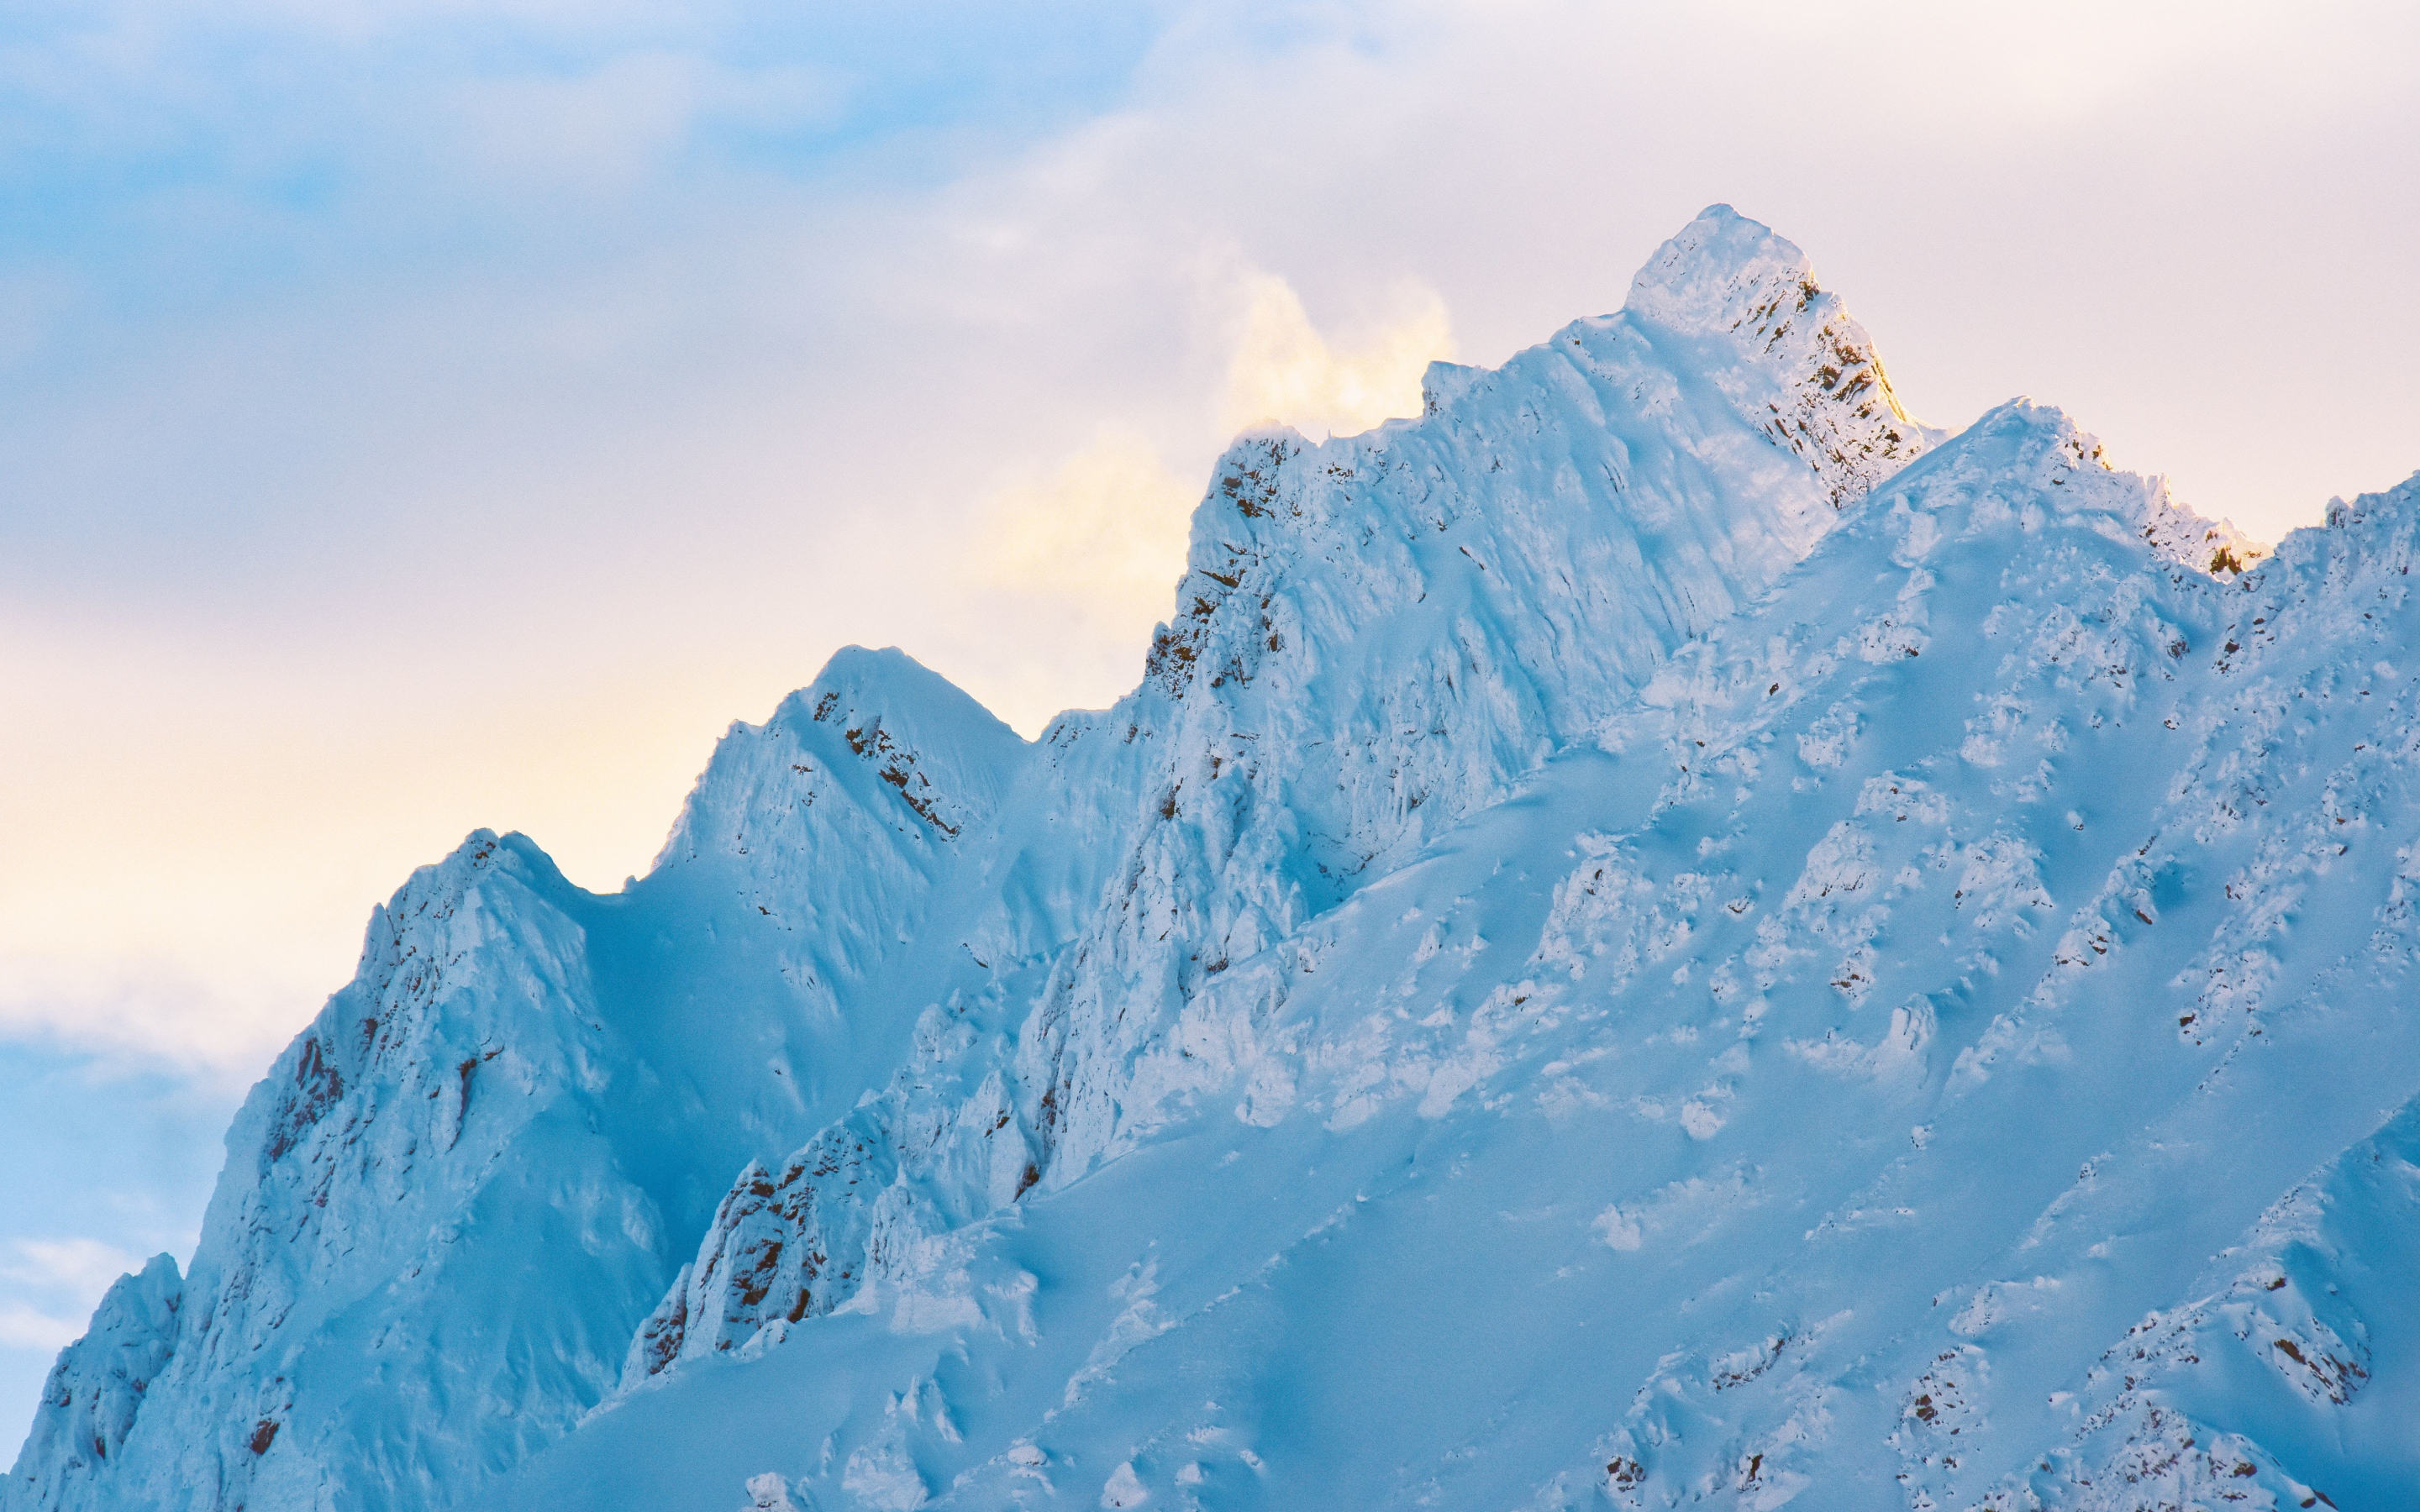 Glacier, mountain, snowy peaks, nature, 2880x1800 wallpaper